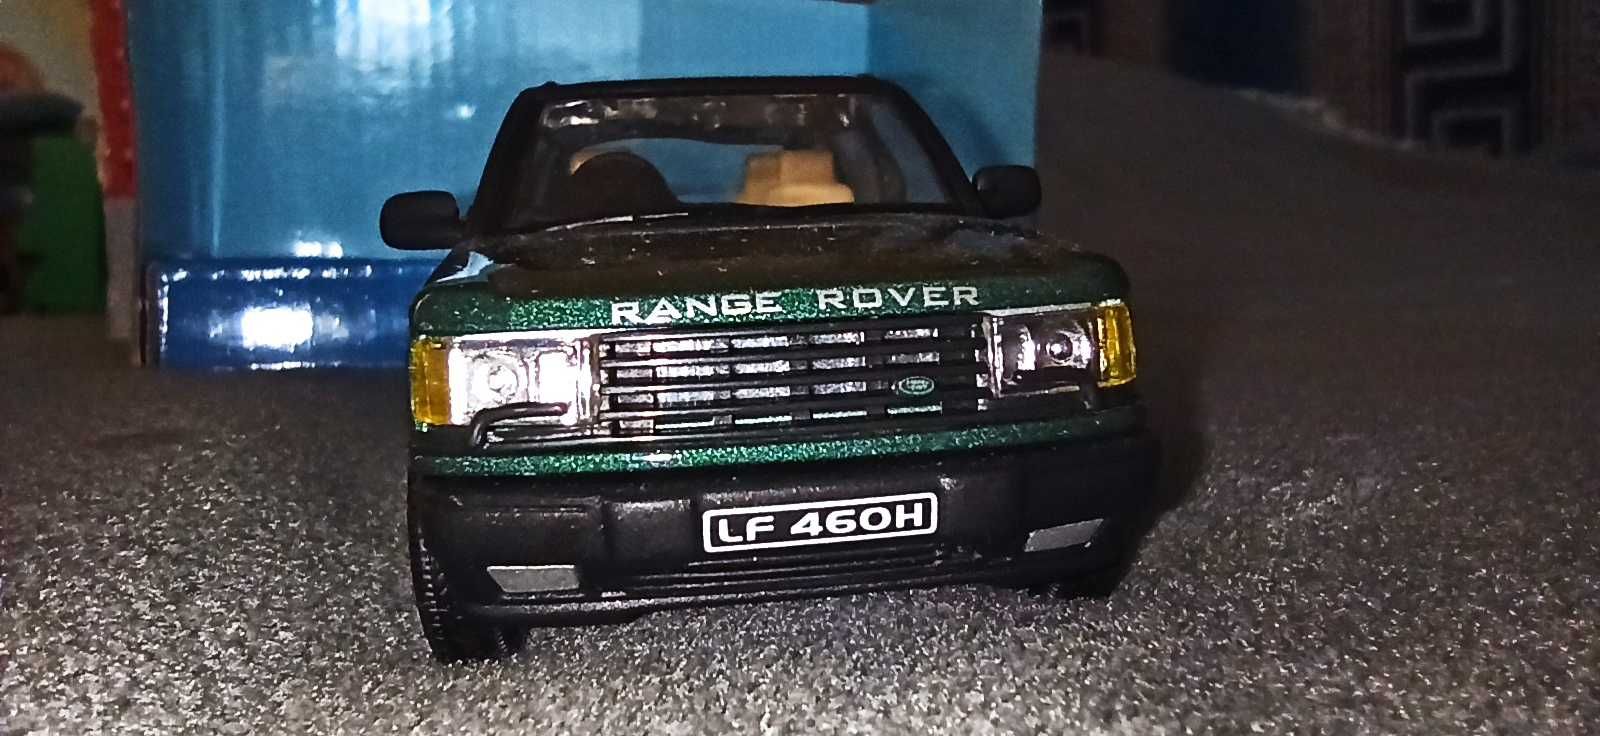 Range Rover 1:43 Cararama, модель автомобиля Рейндж Ровер